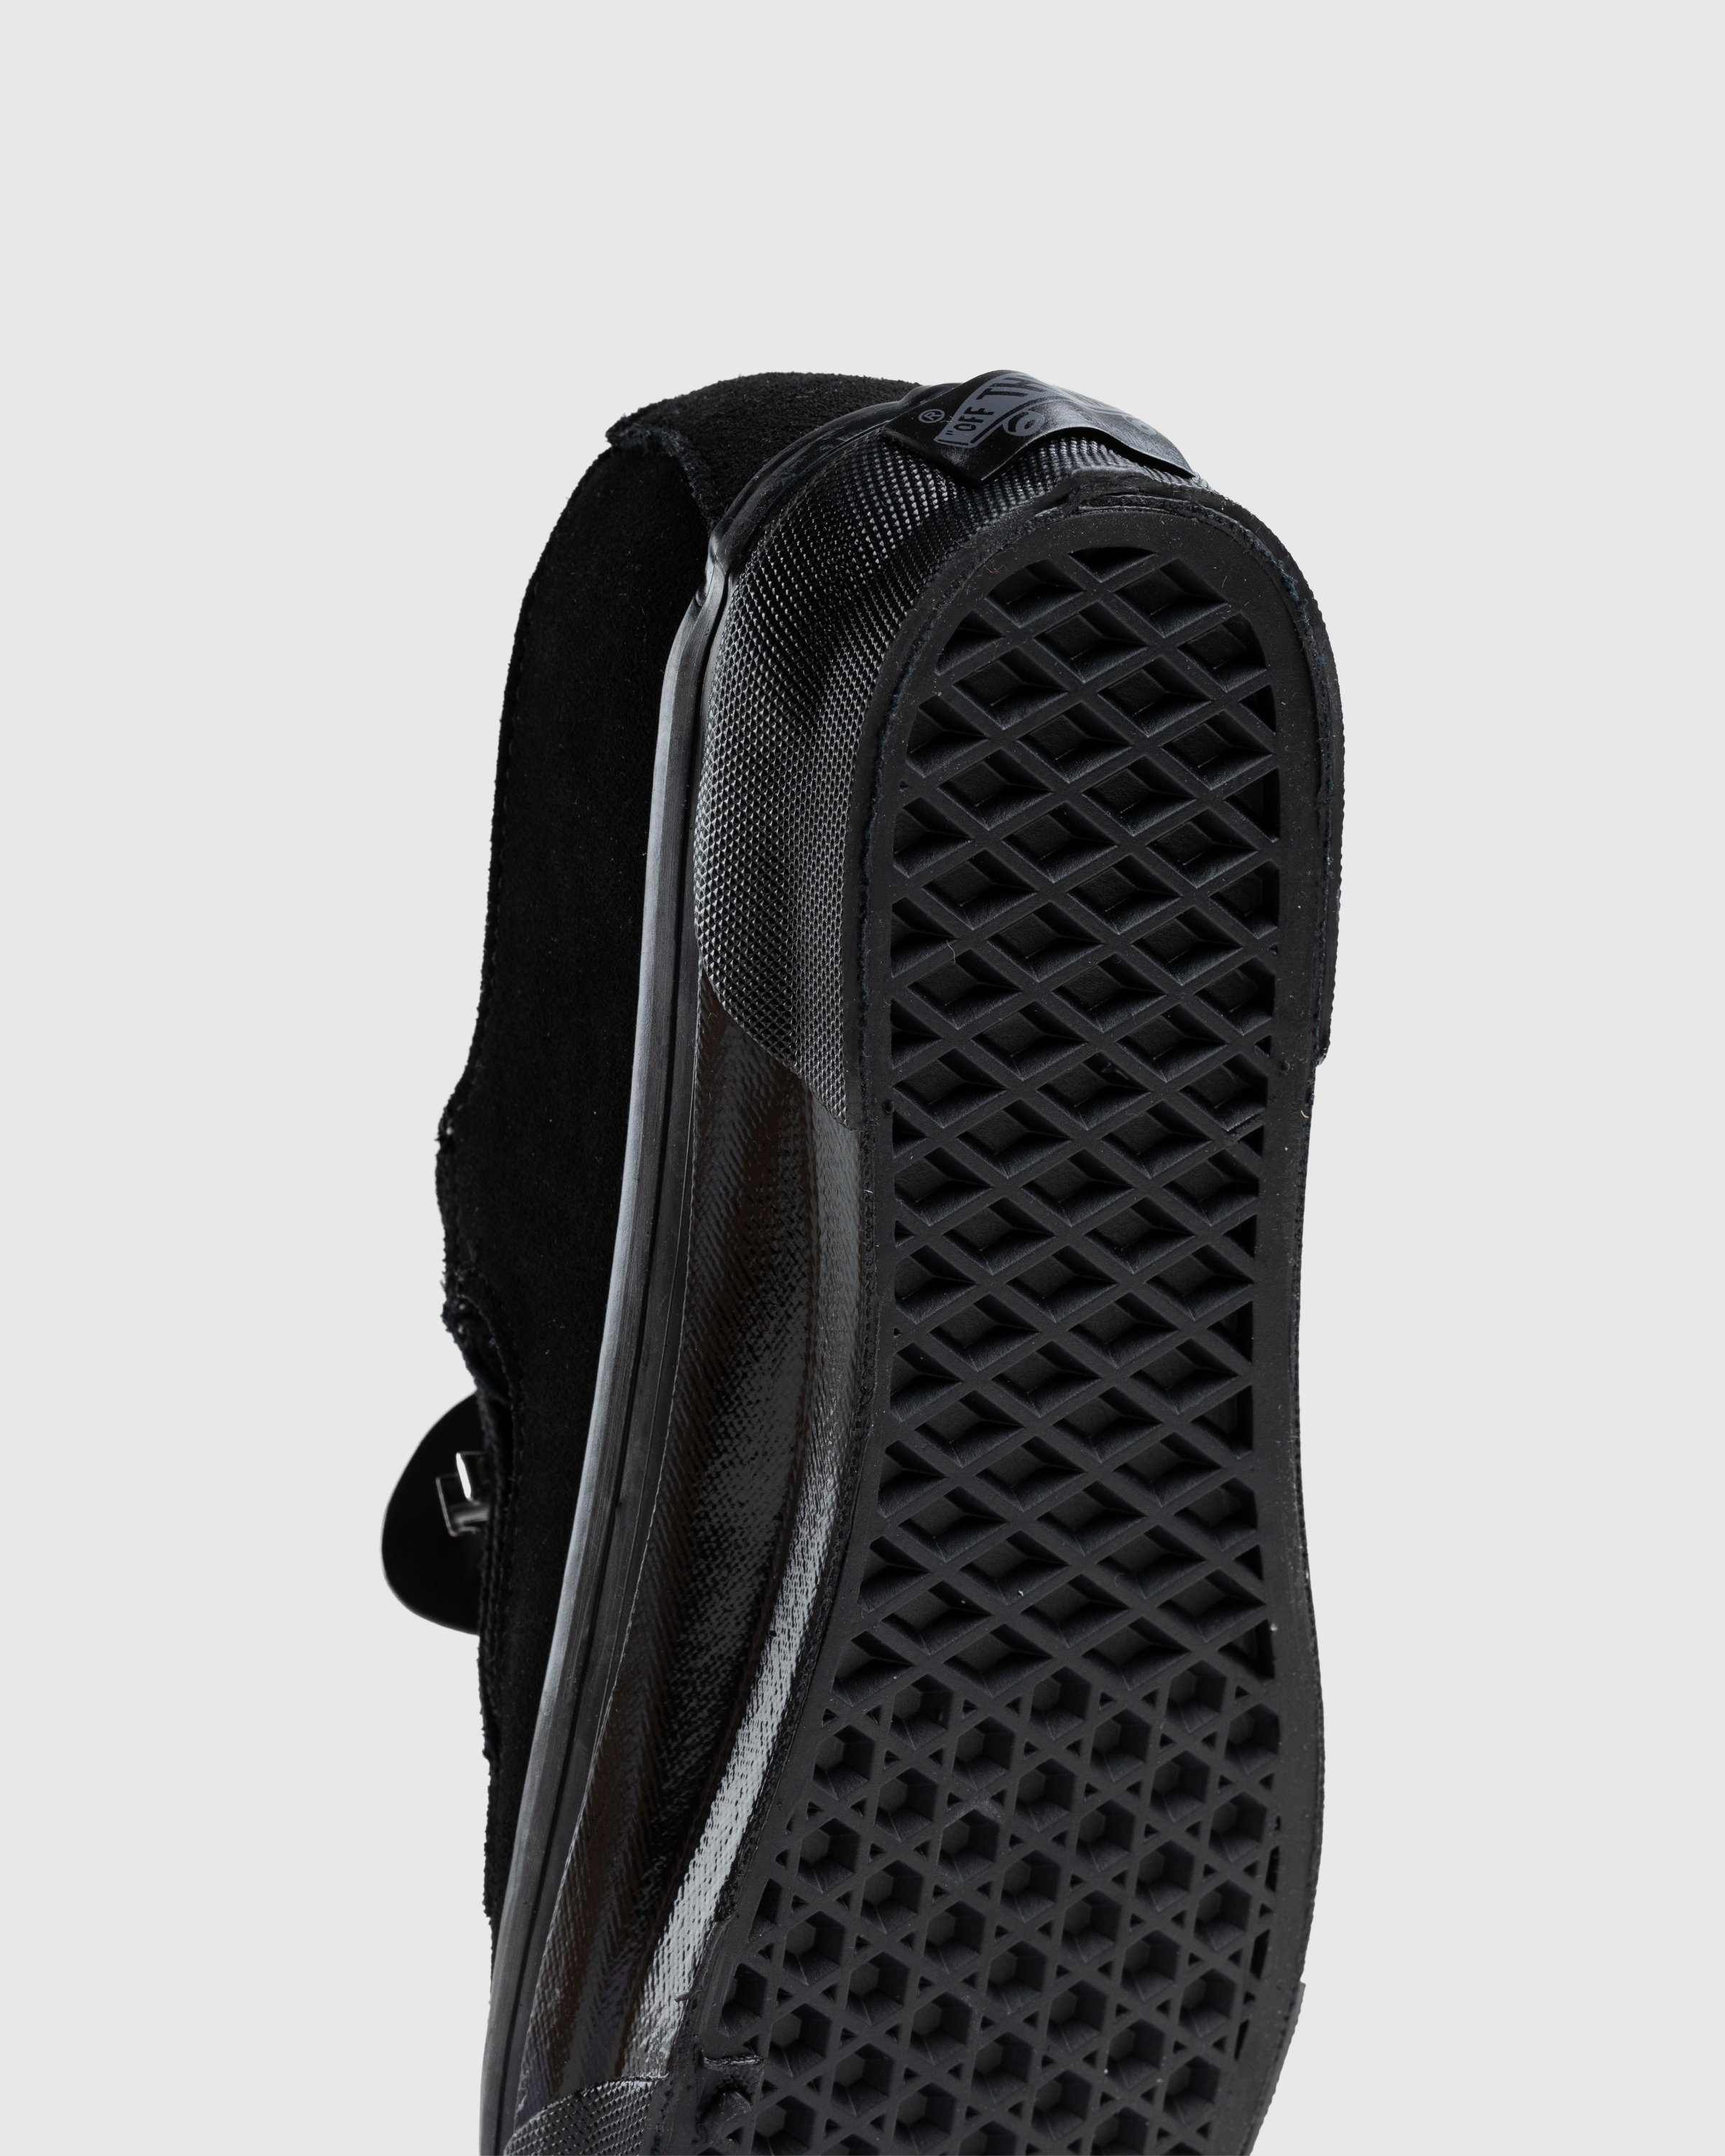 Vans – OG Style 93 LX Black - Sneakers - Black - Image 9